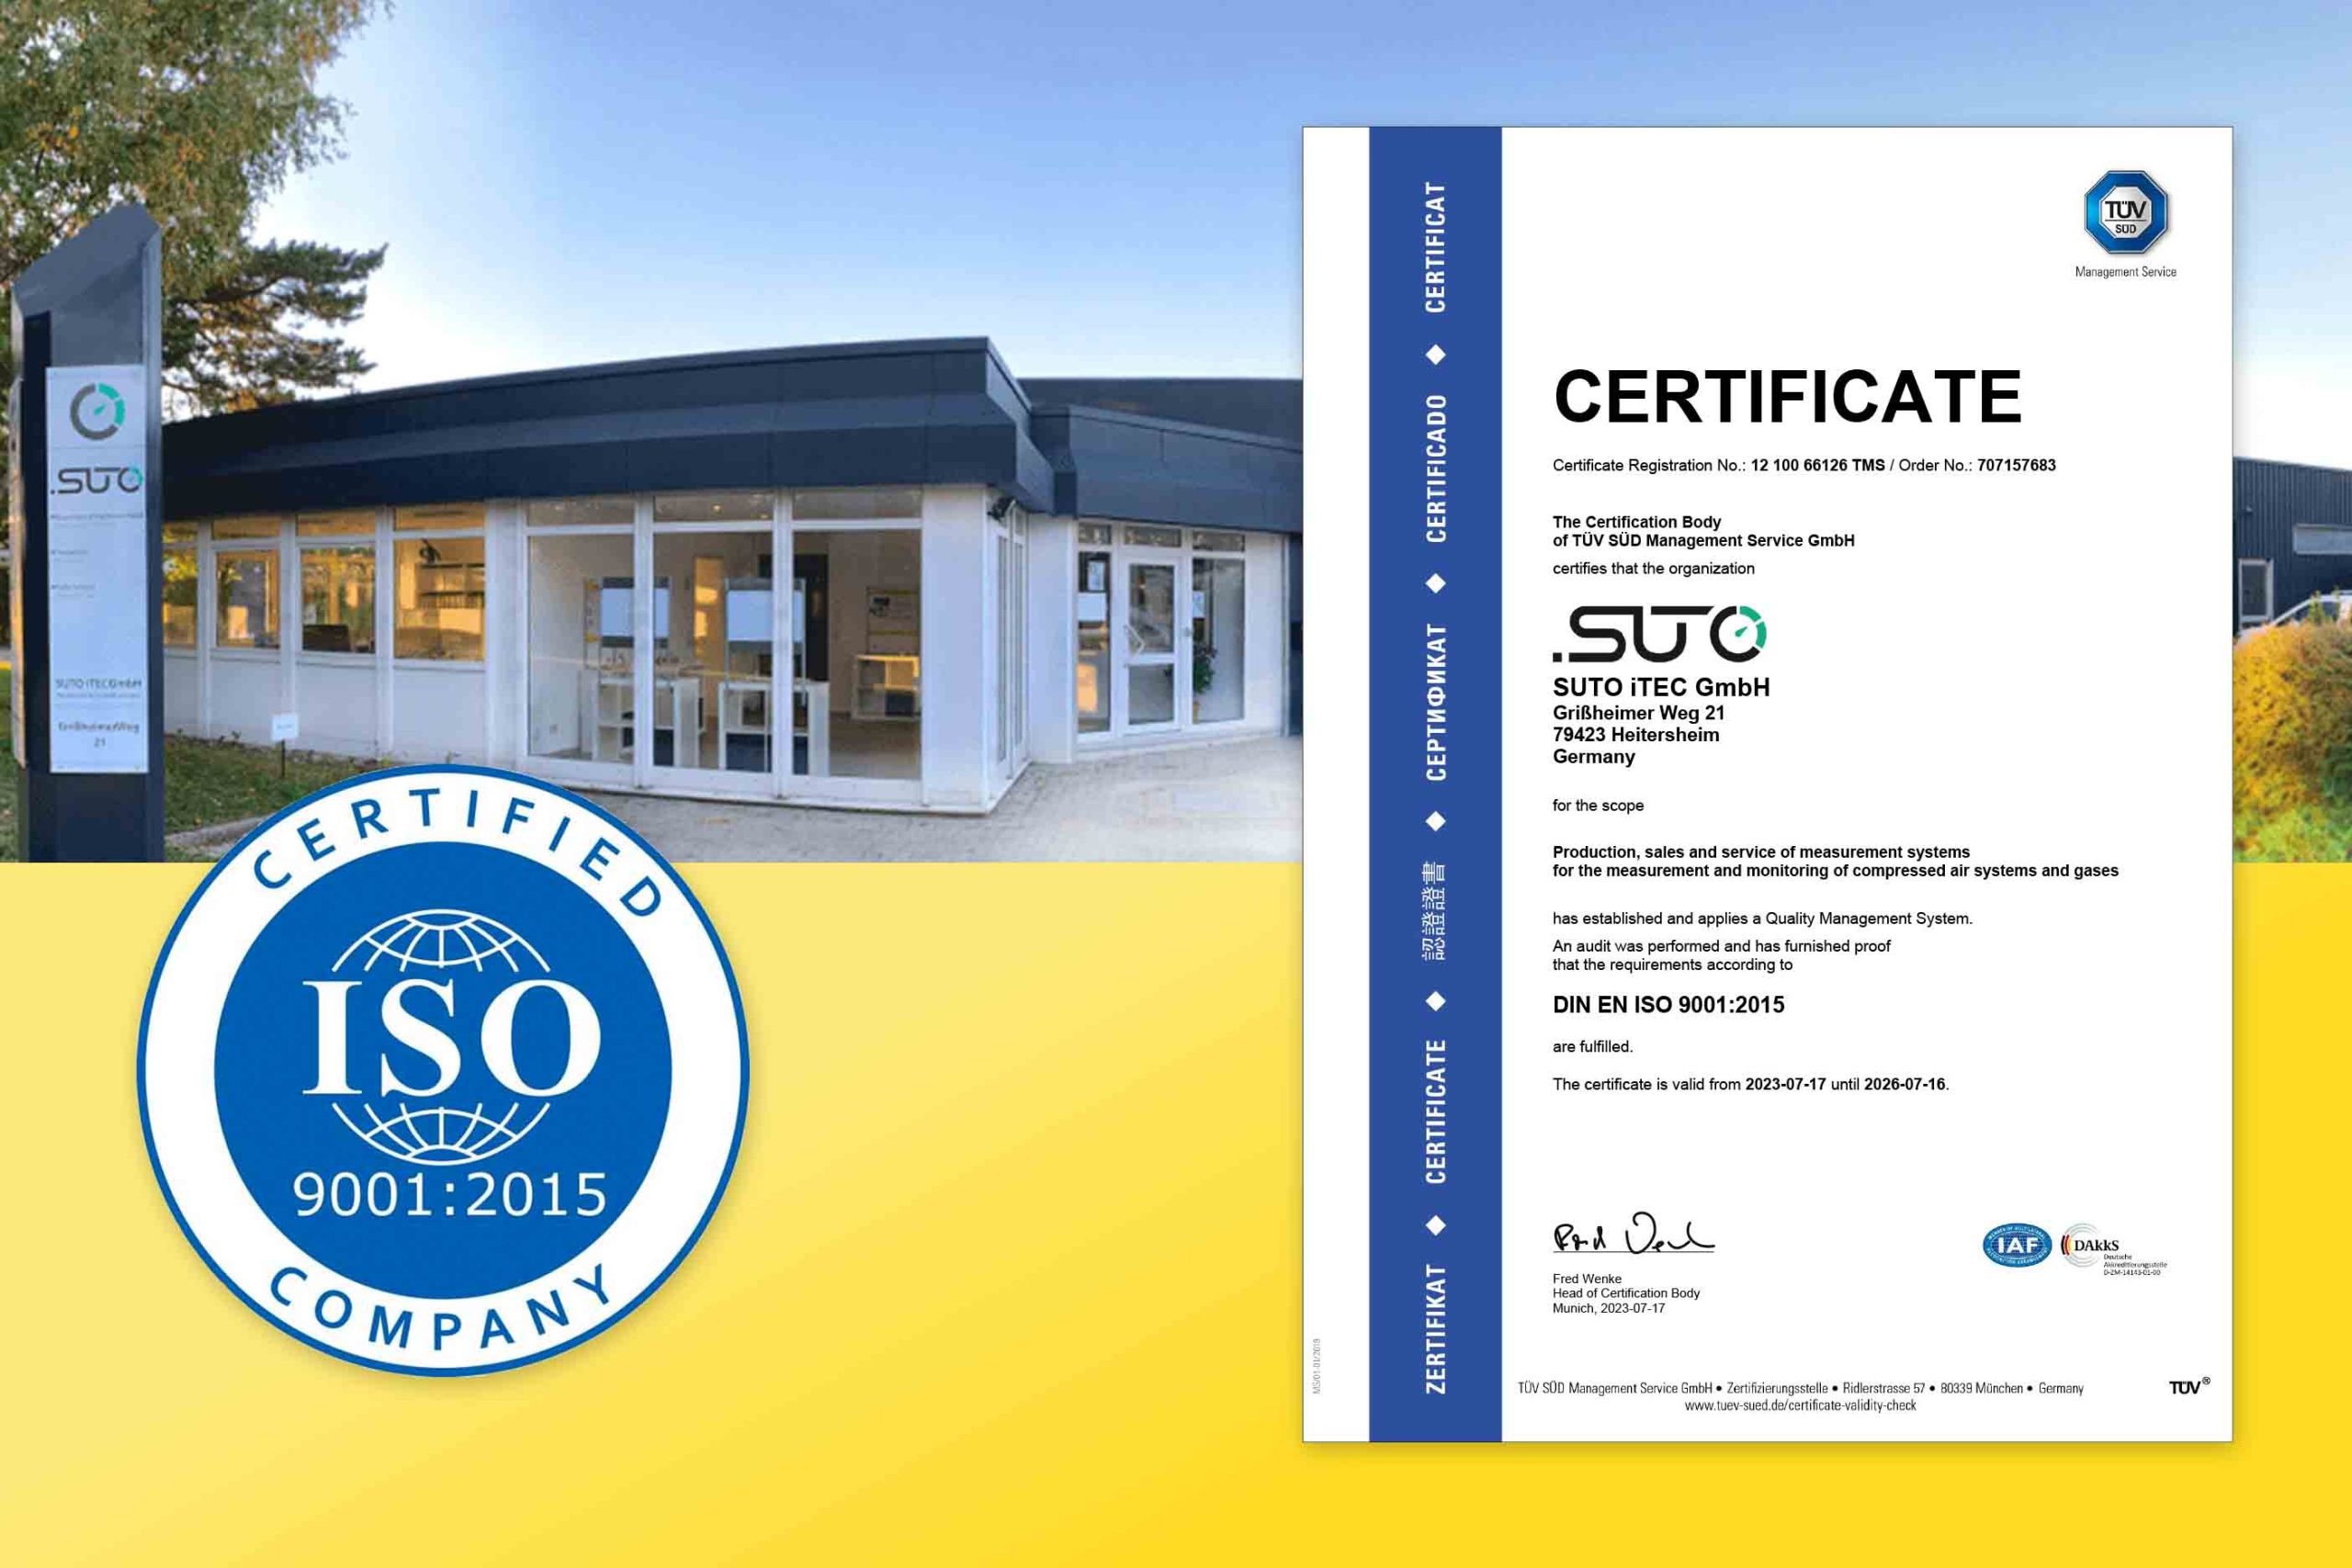 Almanya’daki SUTO iTEC Genel Merkezi ISO 9001:2015 Sertifikası Aldı